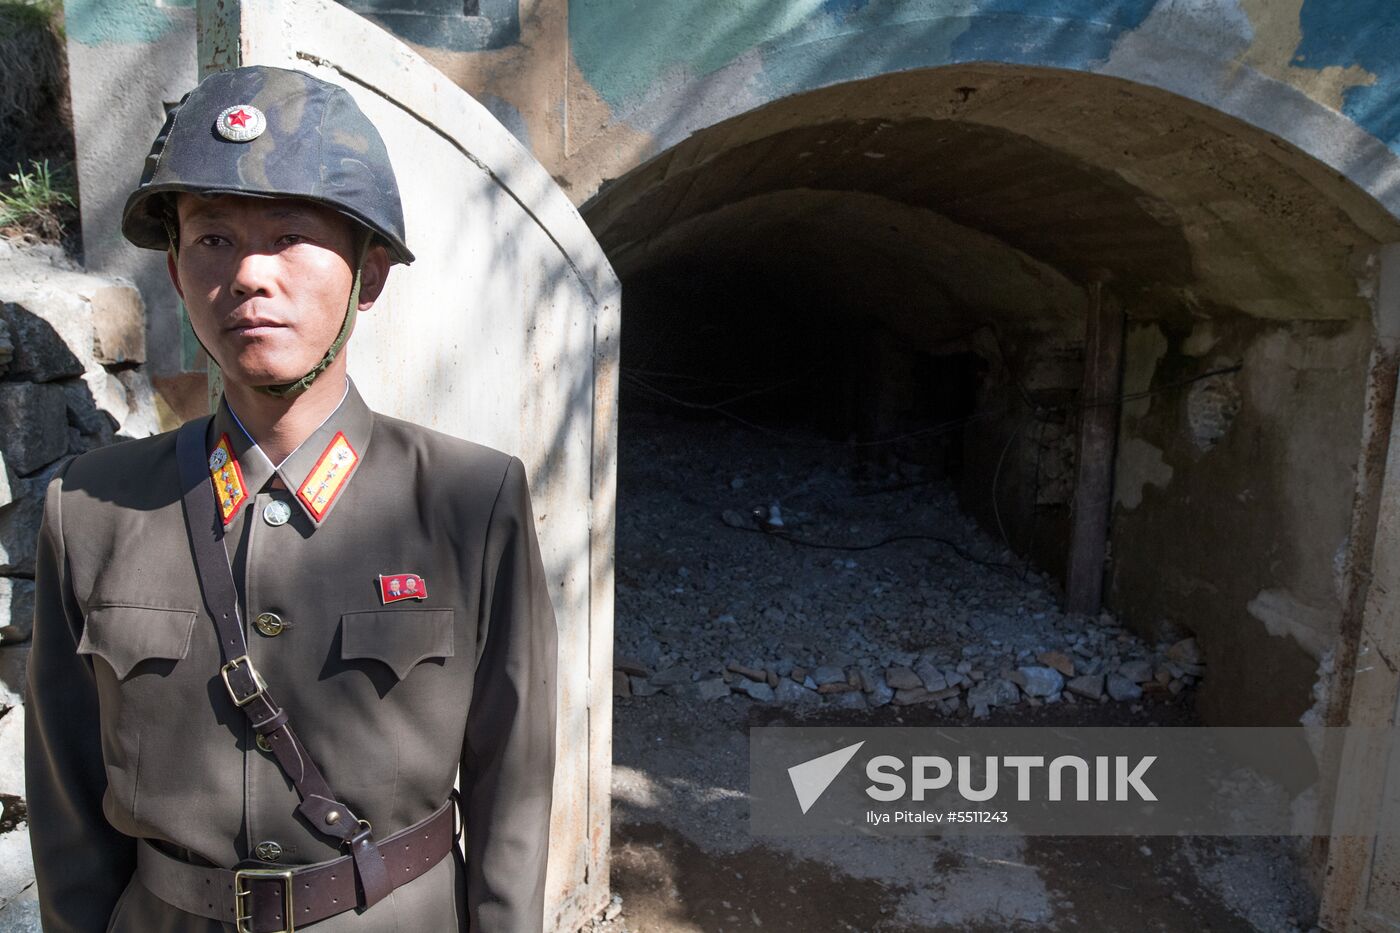 Punggye-ri nuclear test site in North Korea demolished